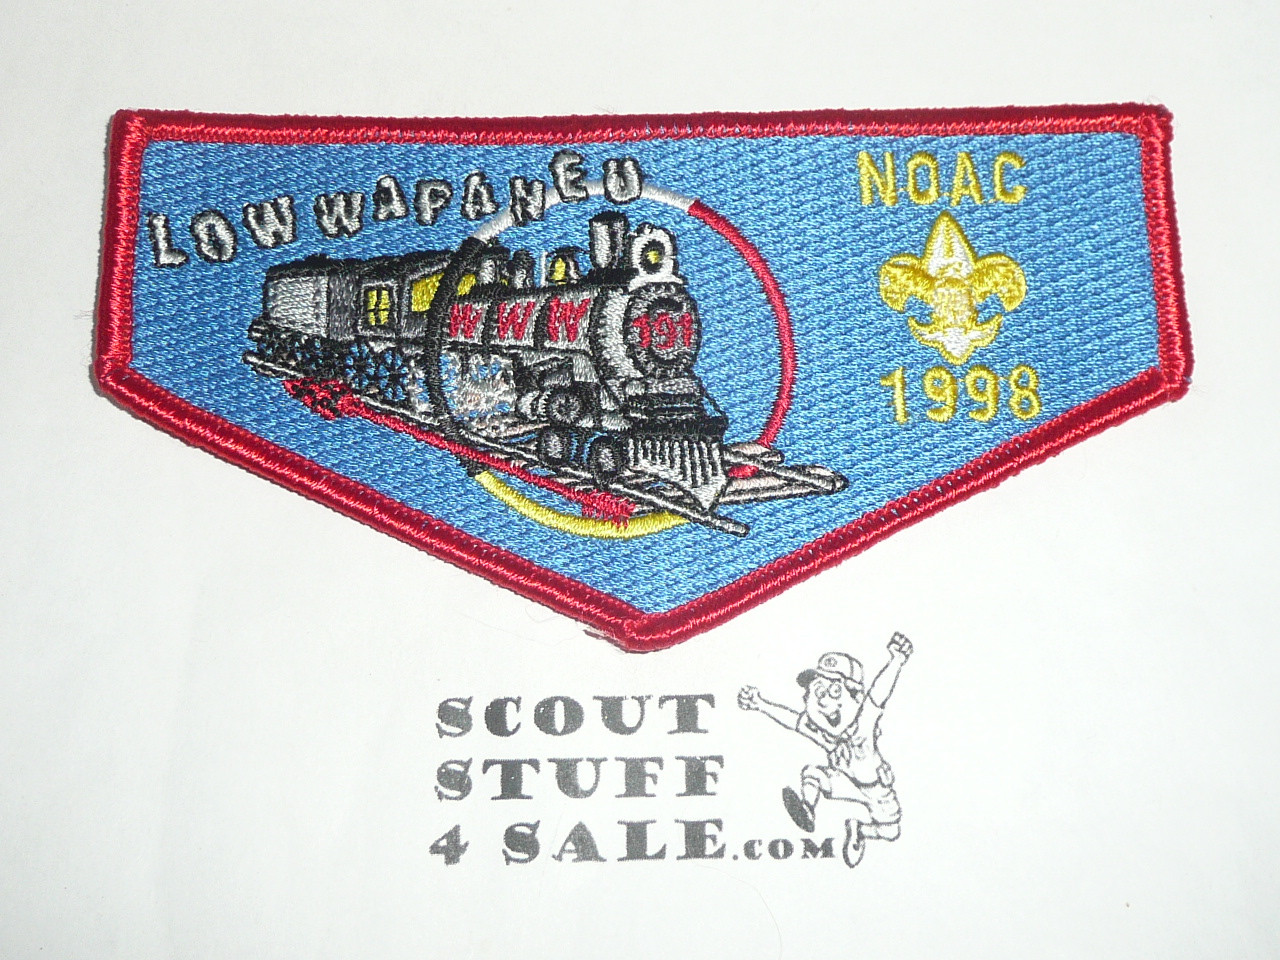 Order of the Arrow Lodge #191 Lowwapaneu s11 1998 NOAC Patch - Scout